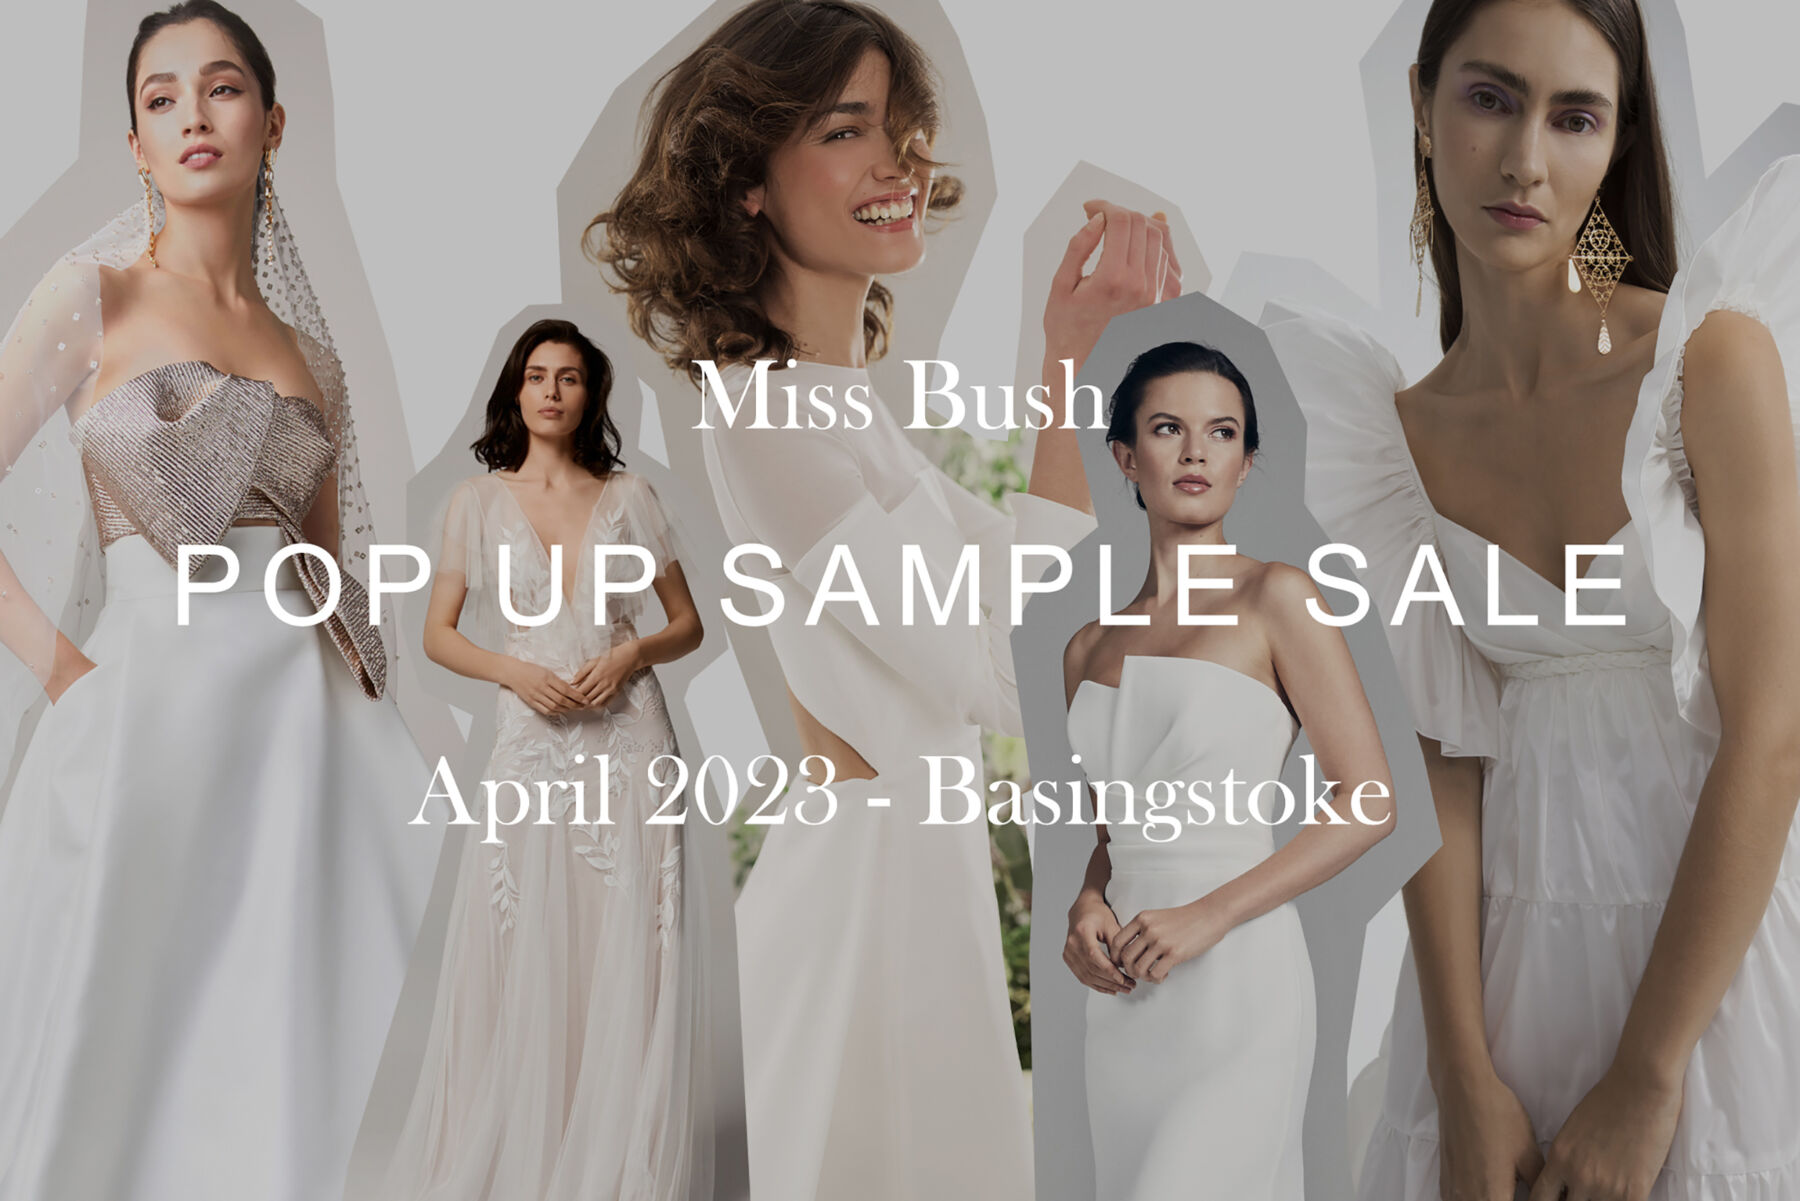 Miss Bush bridal and wedding dress sample sale.